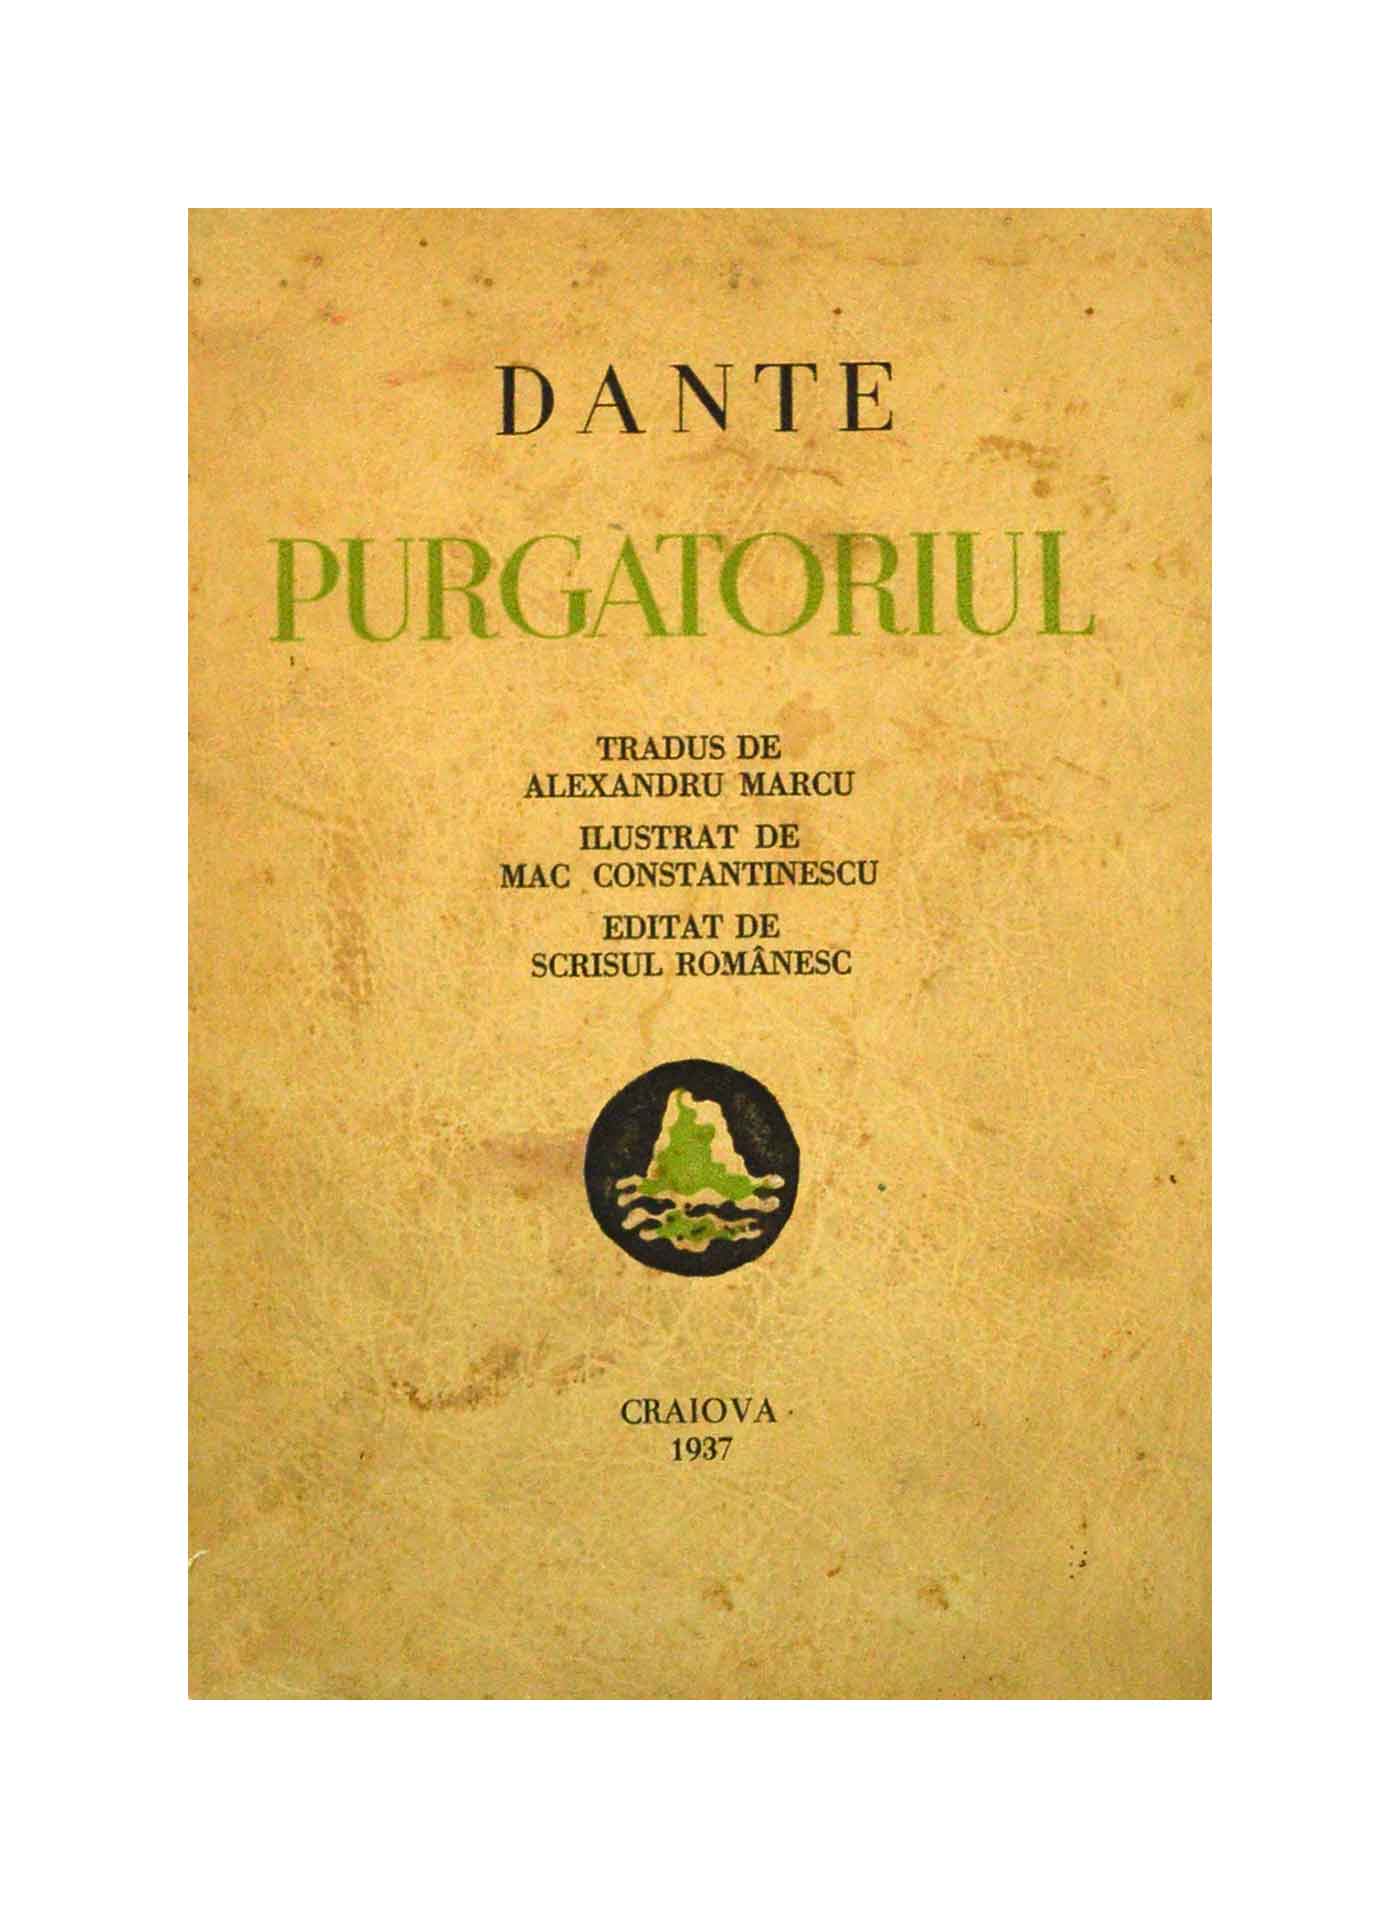 Dante Purgatoriul 1937